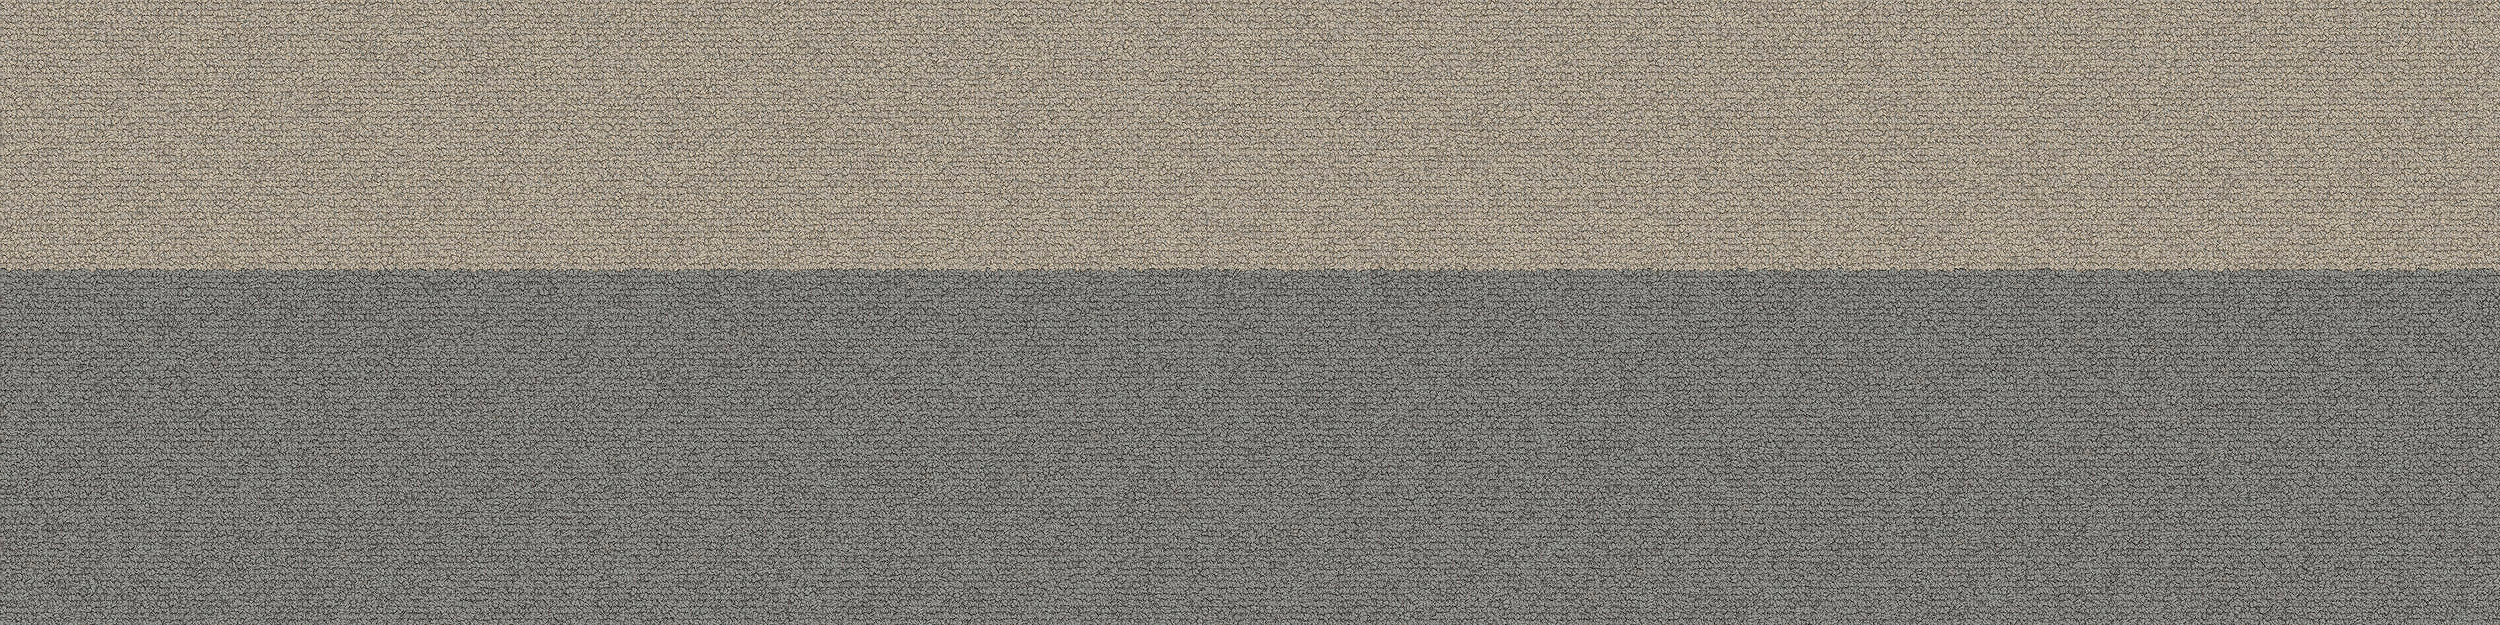 PH210 Carpet Tile In Pigeon Bands imagen número 9